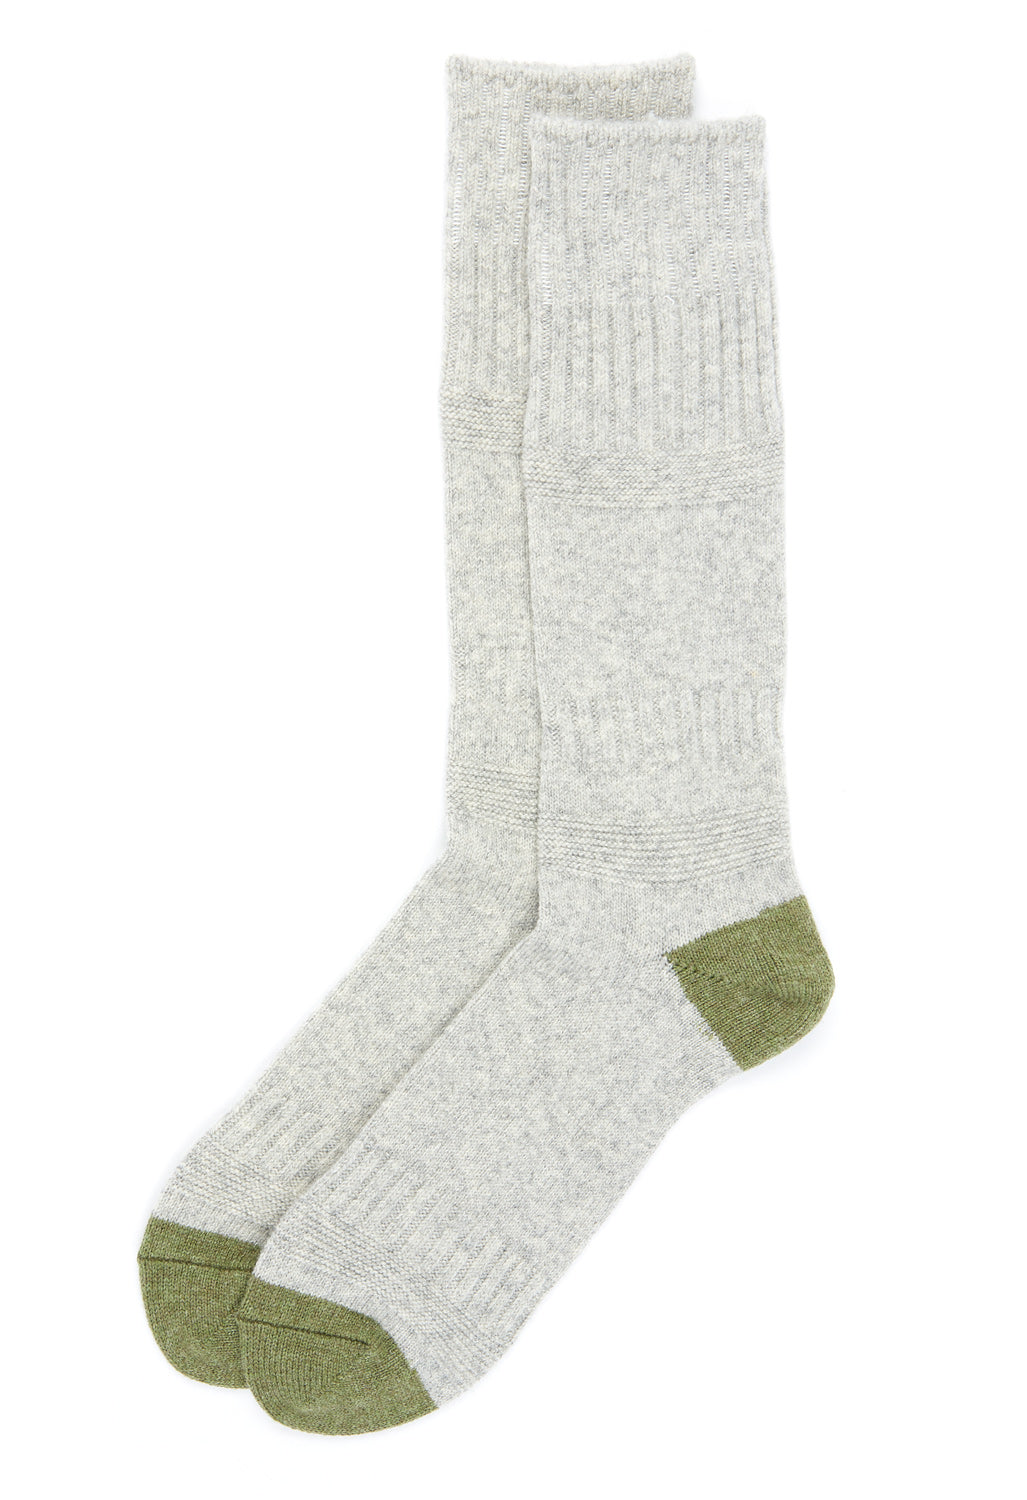 ROTOTO Guernsey Pattern Crew Socks - Light Grey / Mid Green